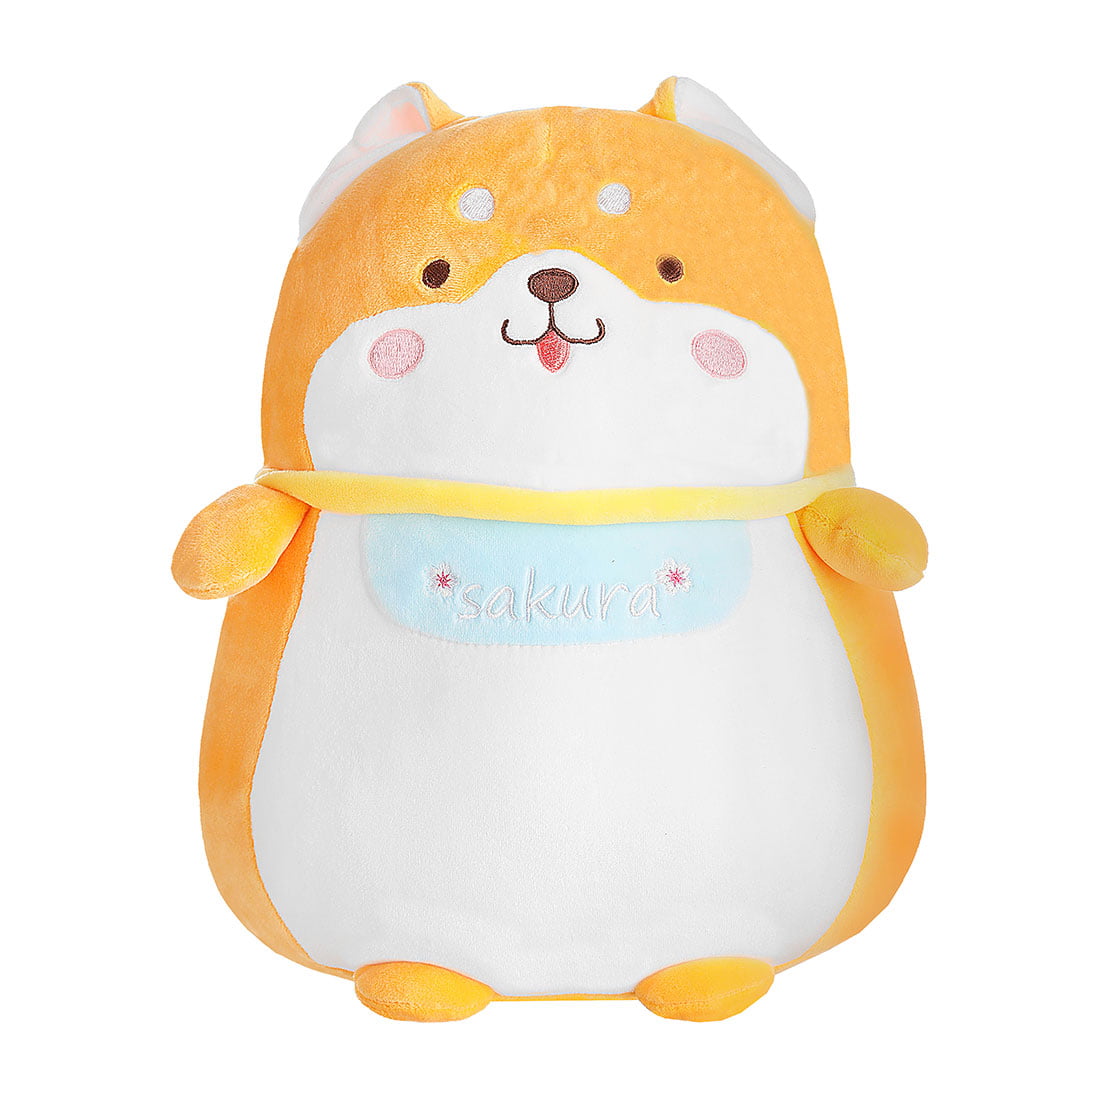 Hot Japanese Anime Shiba Inu Dog Plush Doll Soft Stuffed Animal Toy Cute Pillow 